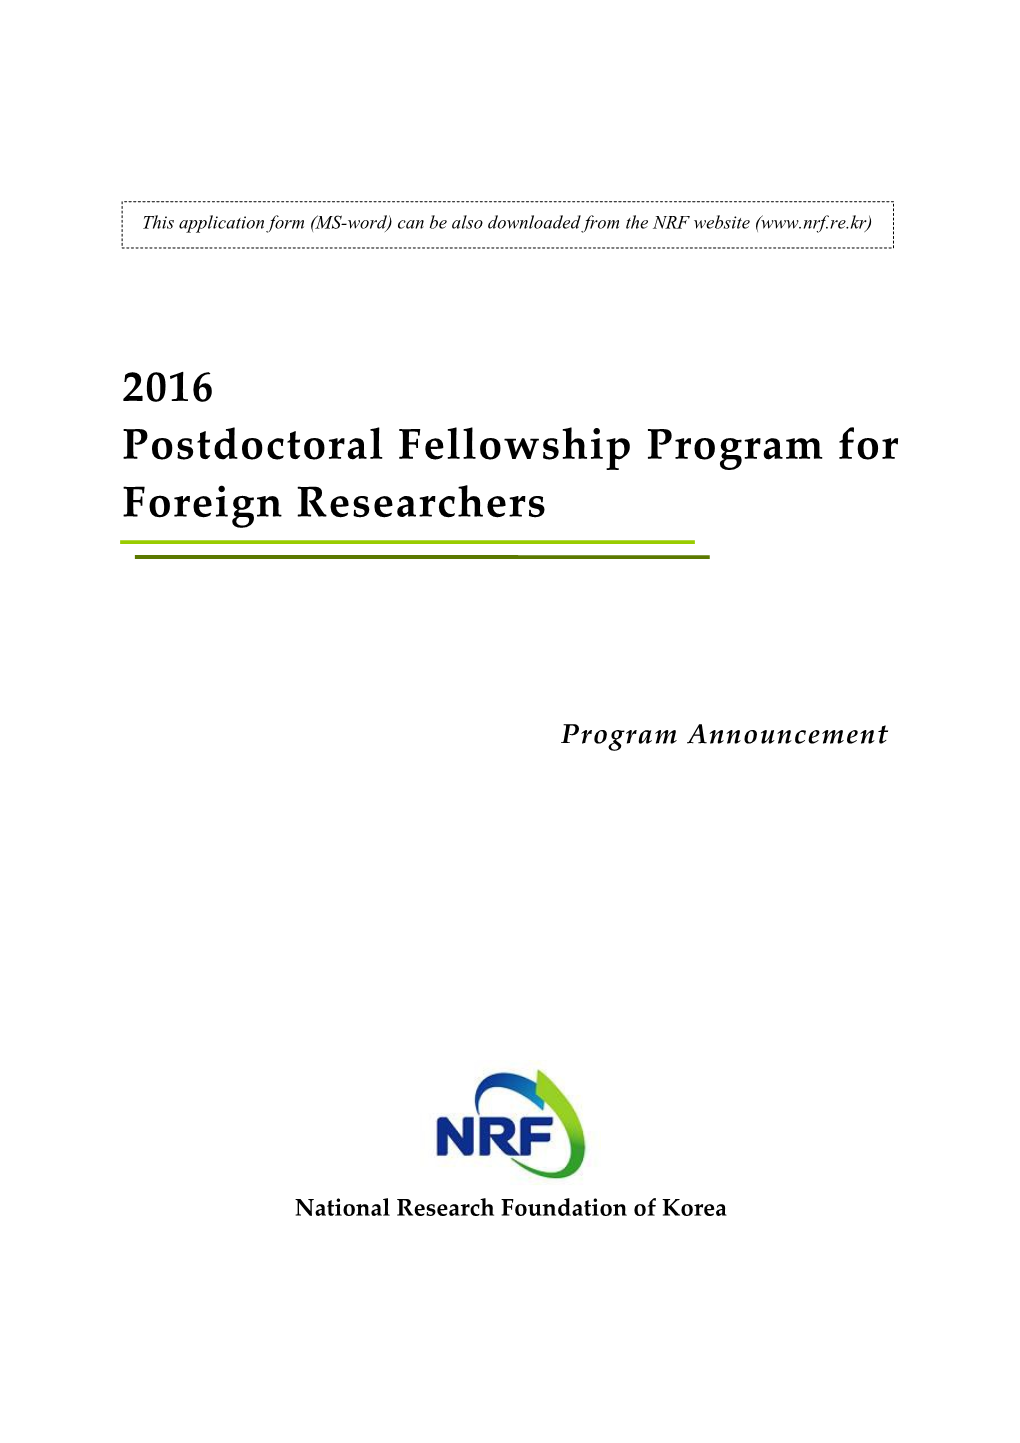 Postdoctoral Fellowship Programfor Foreign Researchers